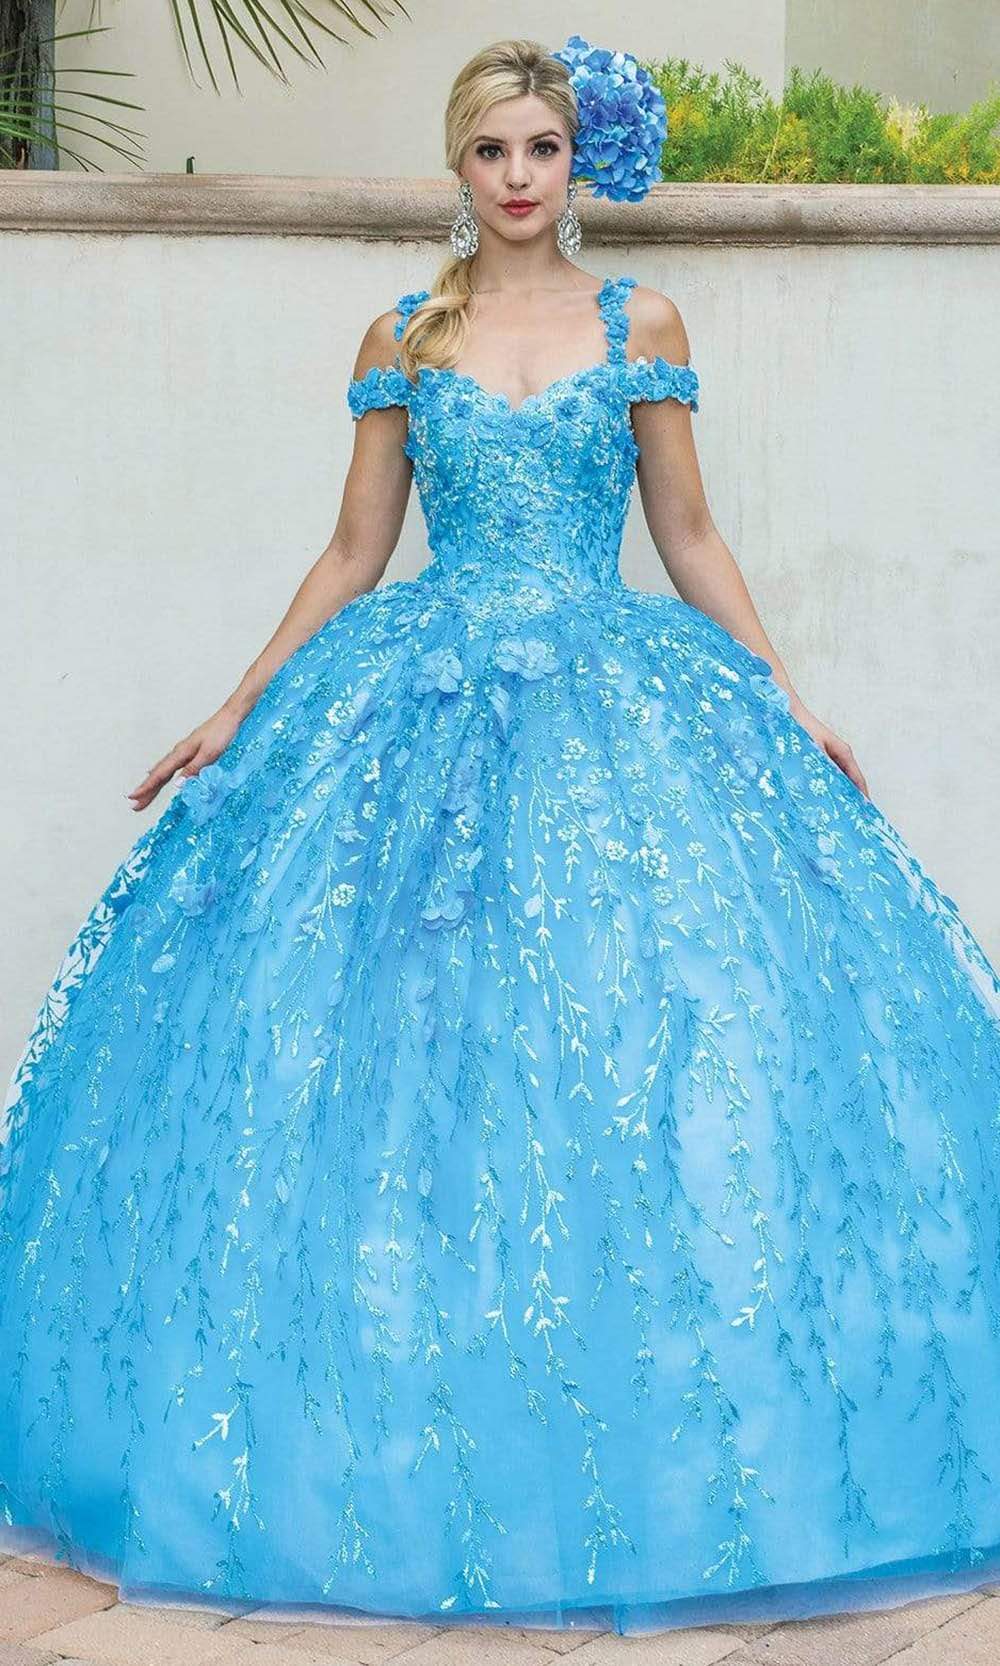 Dancing Queen - 1640 3D Floral Applique Corset Lace-Up Back Ballgown Special Occasion Dress